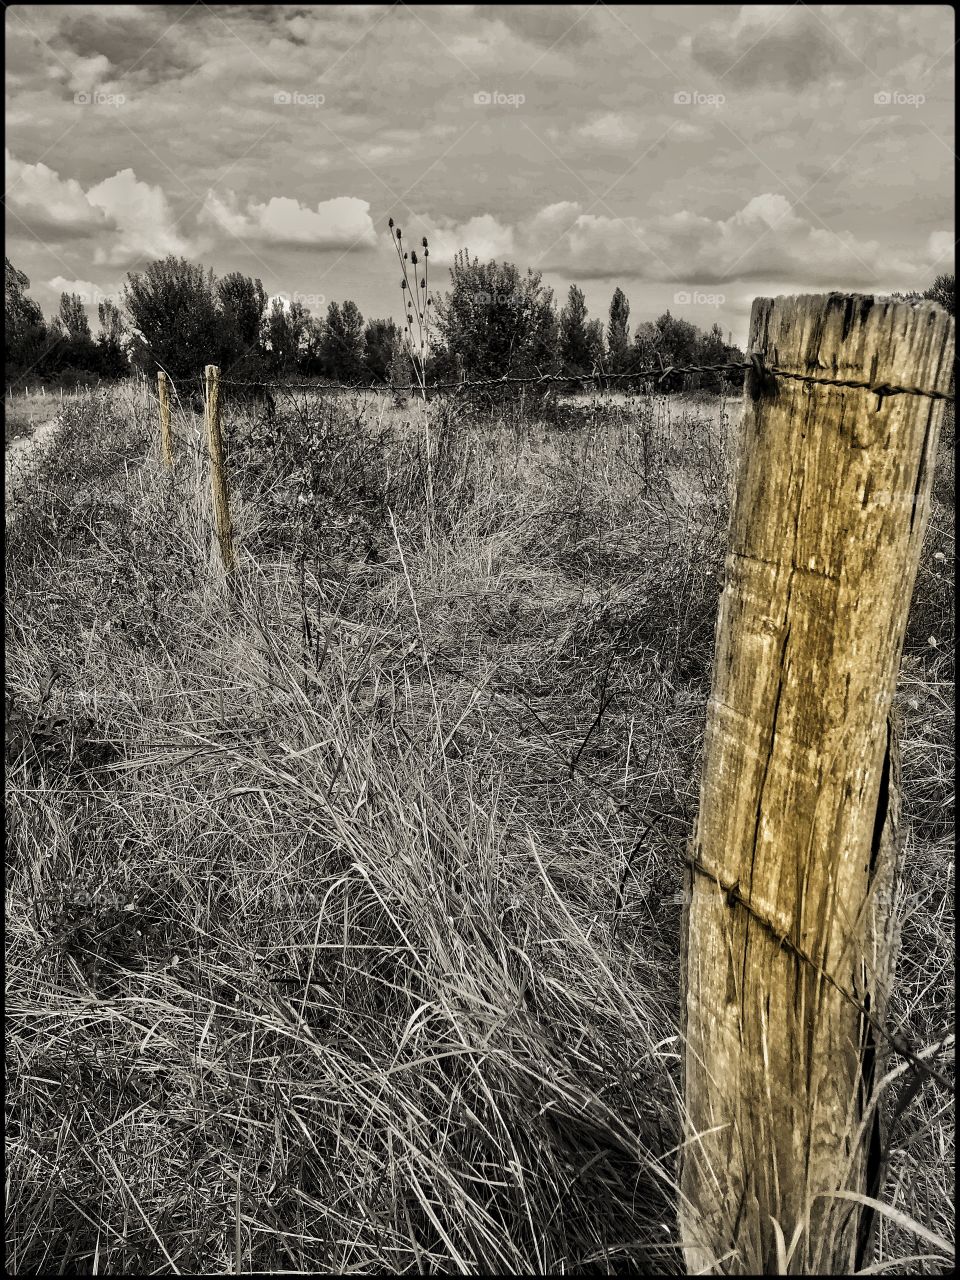 A fence